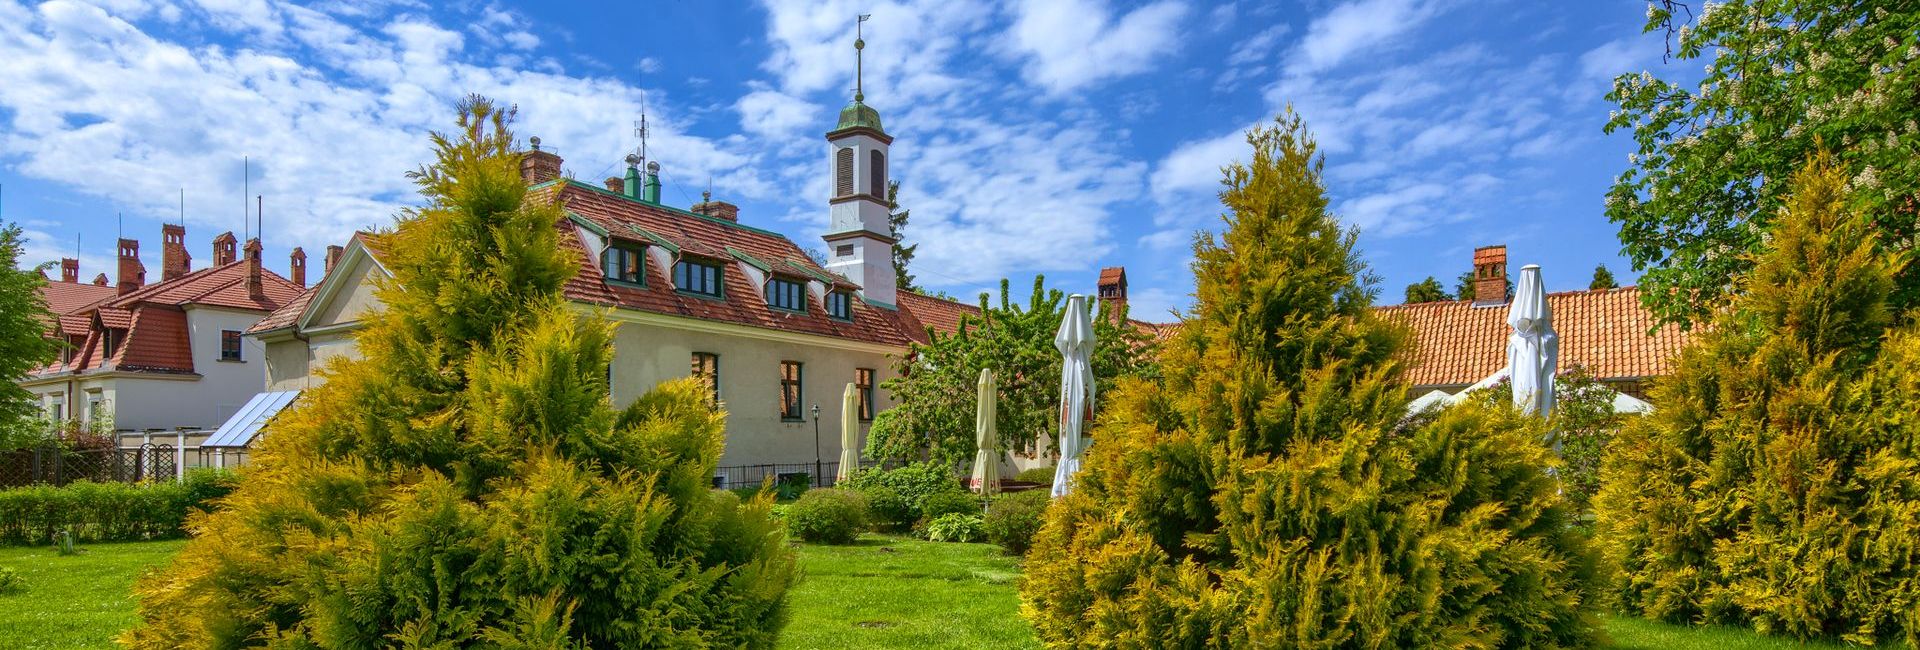 Kadyny Folwark Hotel & Spa with garden and trees in Tolkmicko, Poland